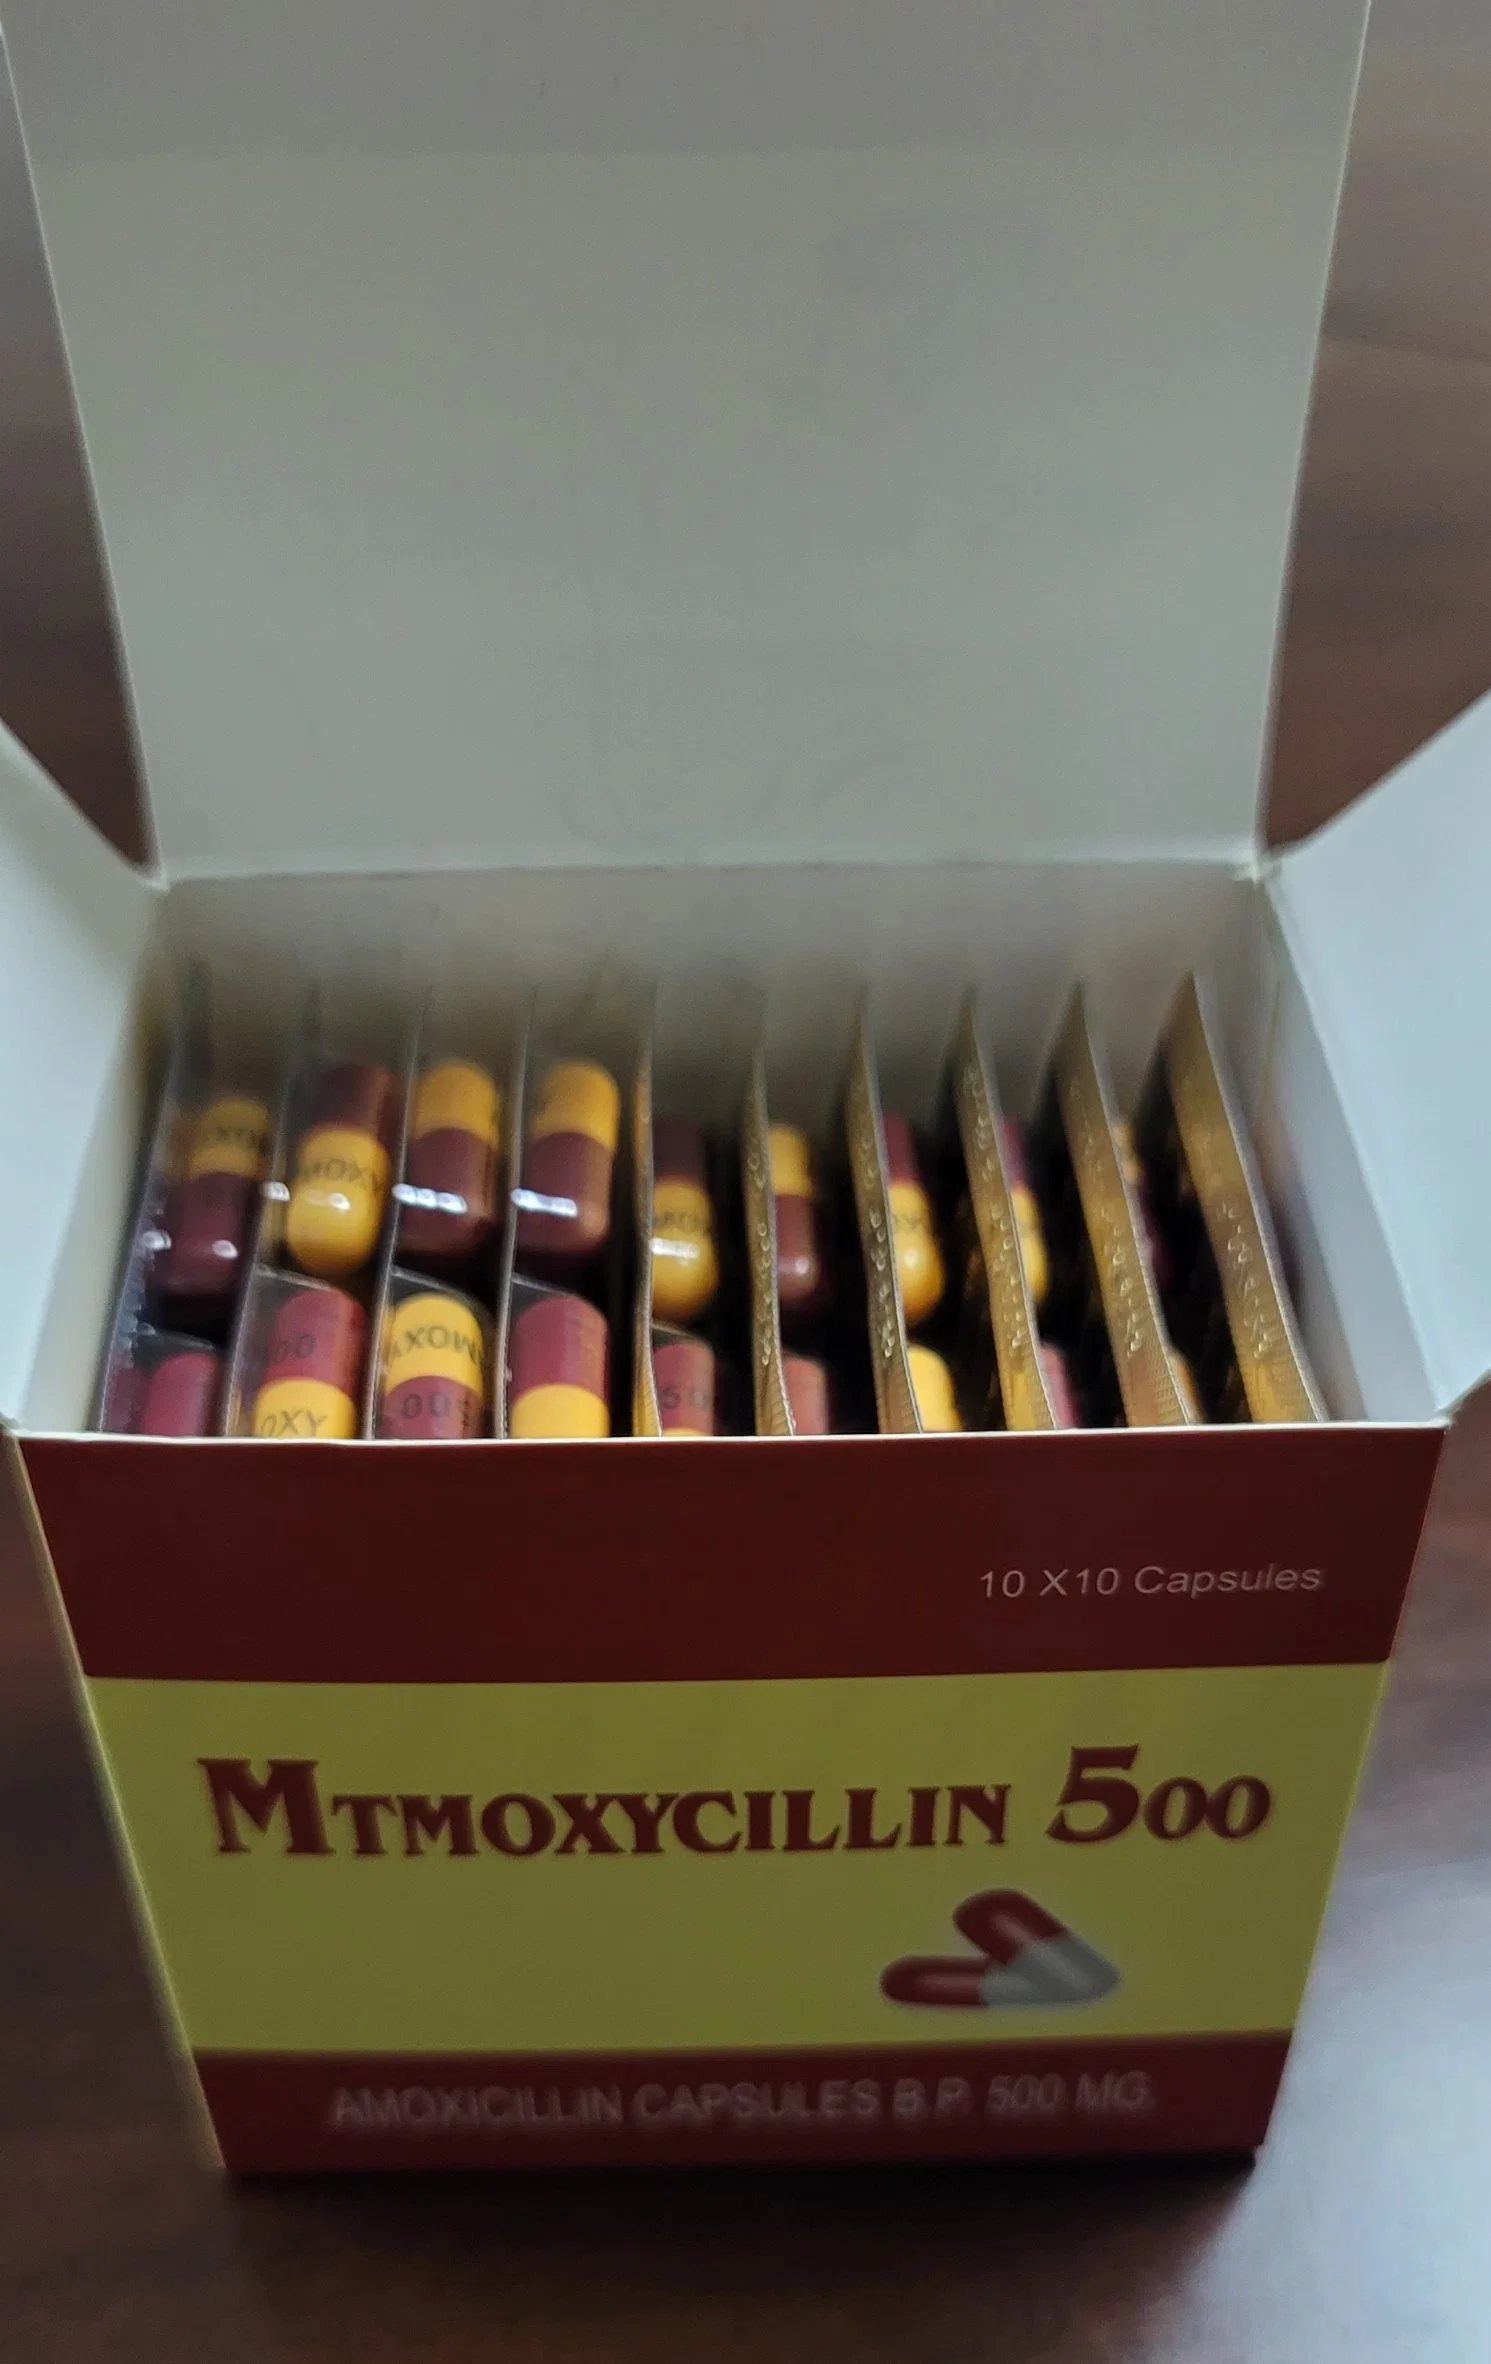 Amoxicillin Kapseln 500mg Western Medicine Pharmaceuticals